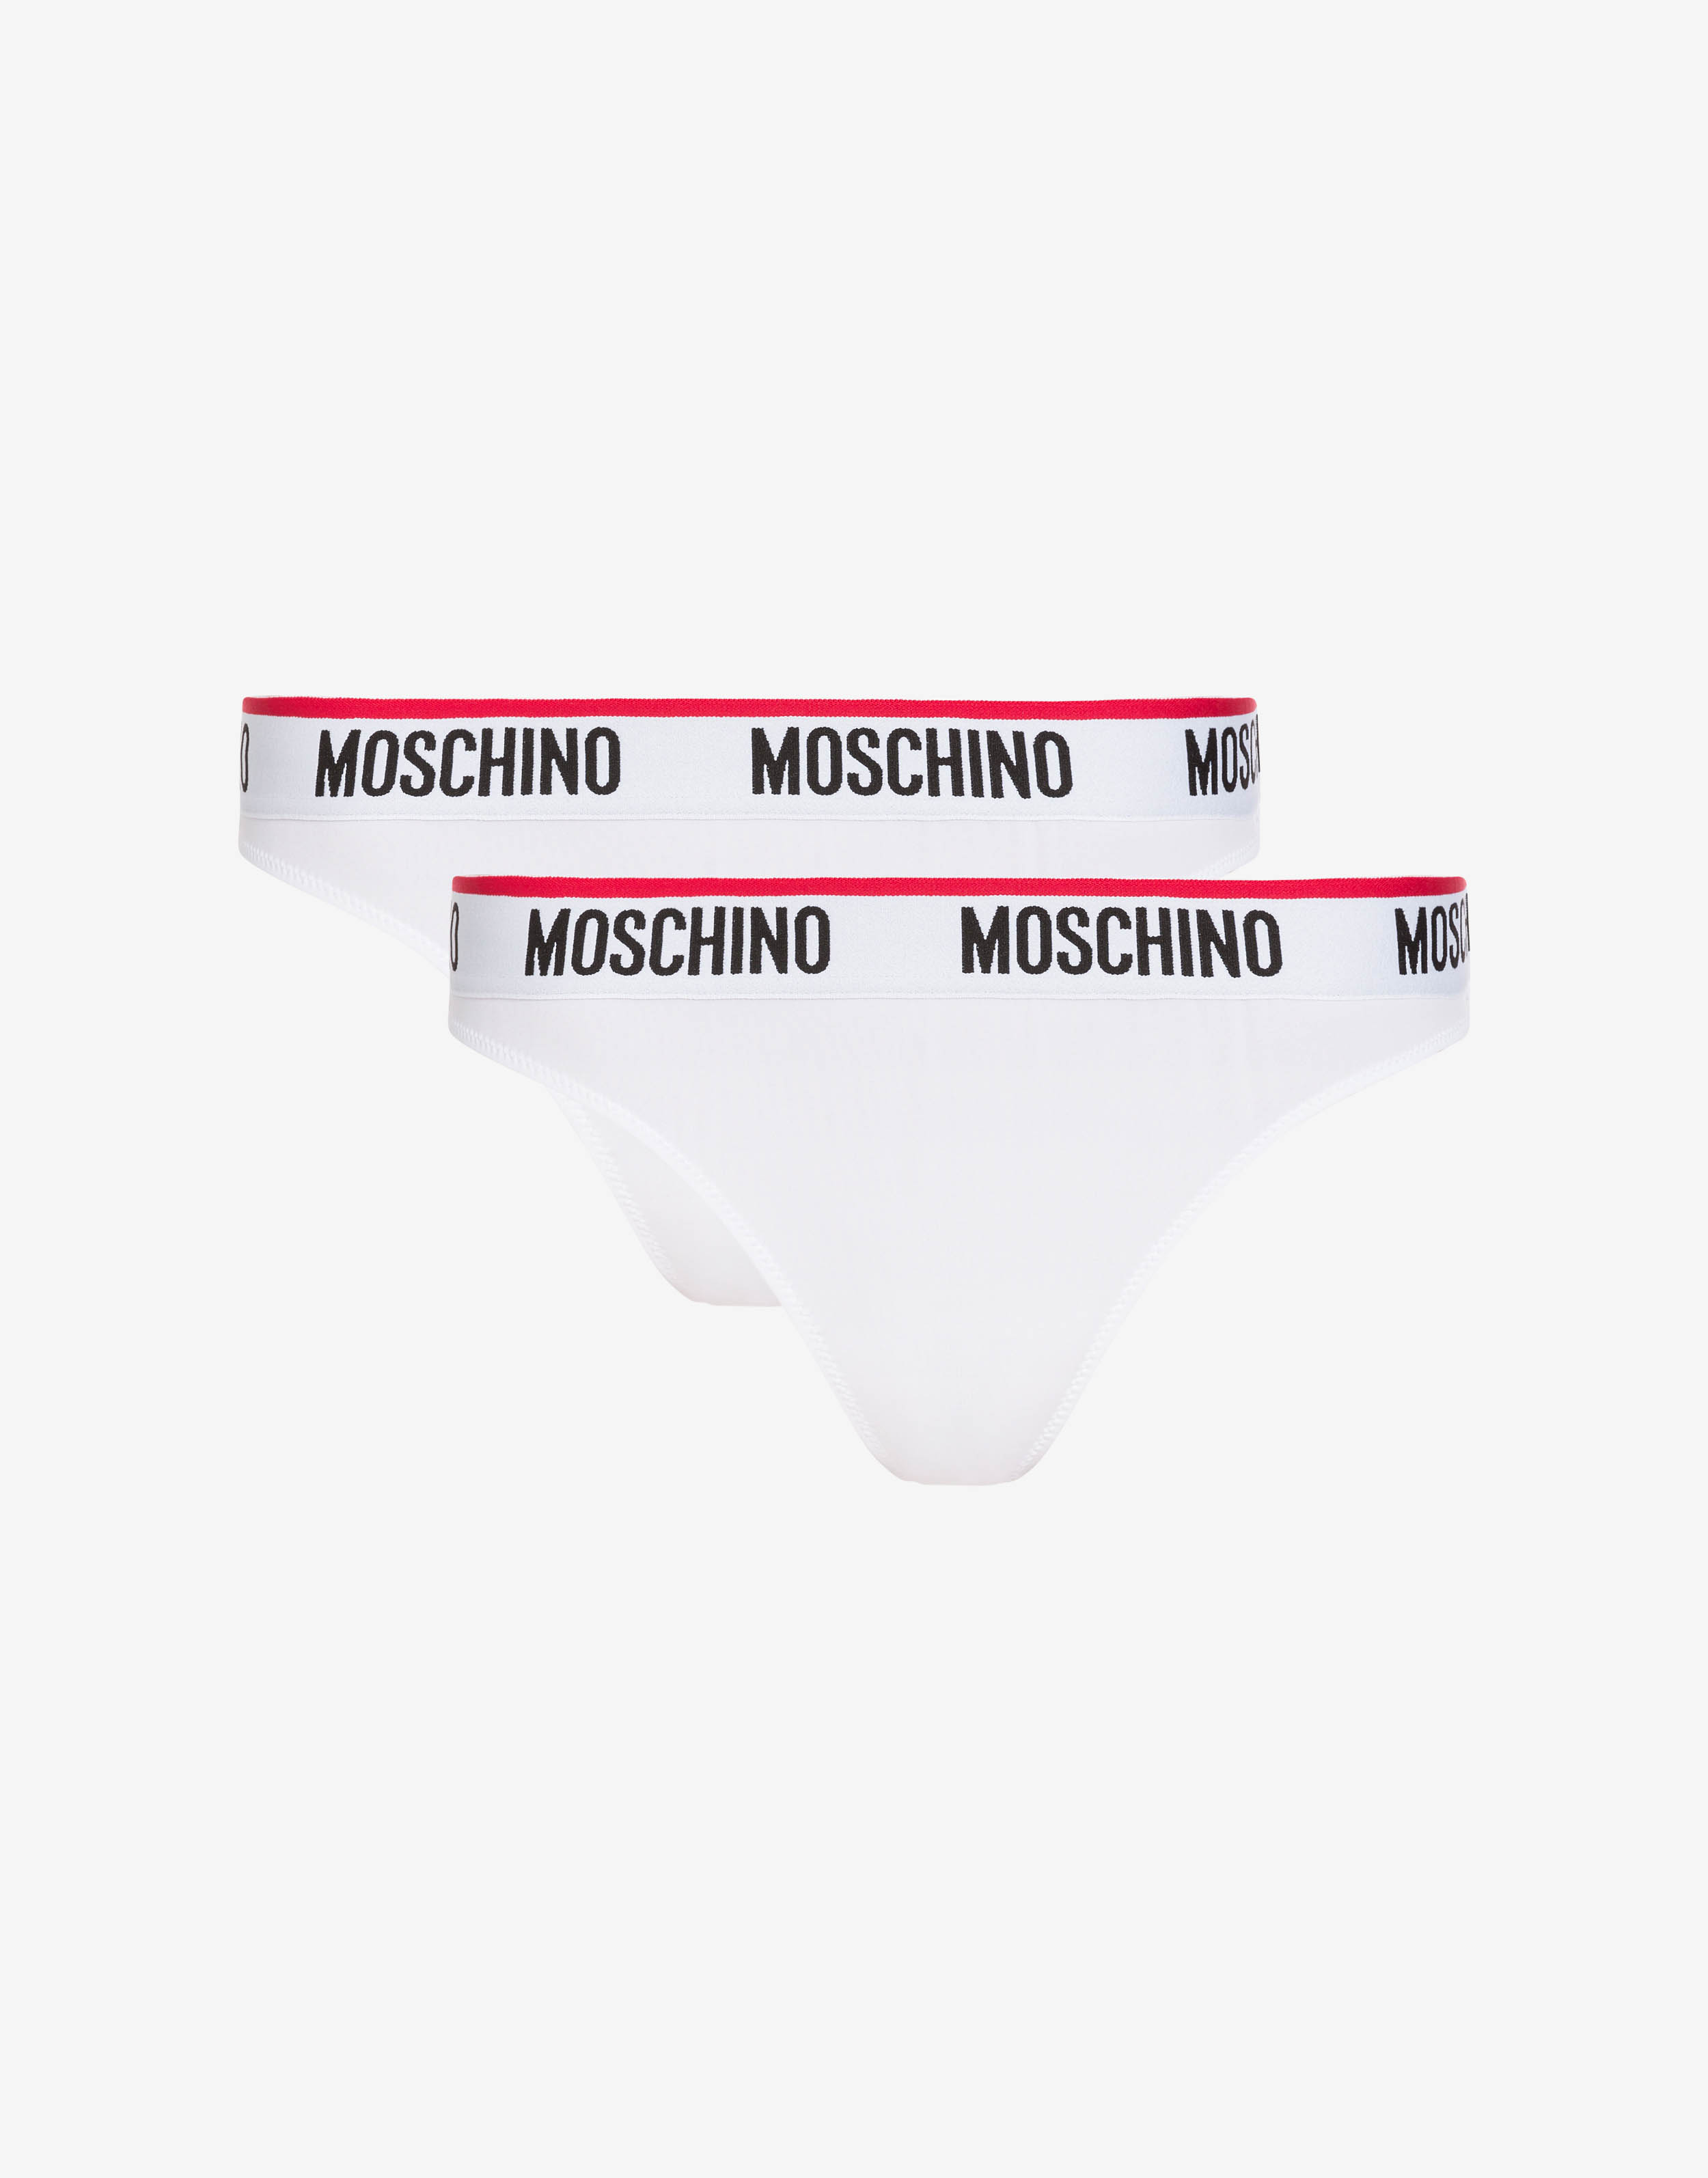 Moschino Triangle Bra Grey Brand New With Tags Size XS UK 8